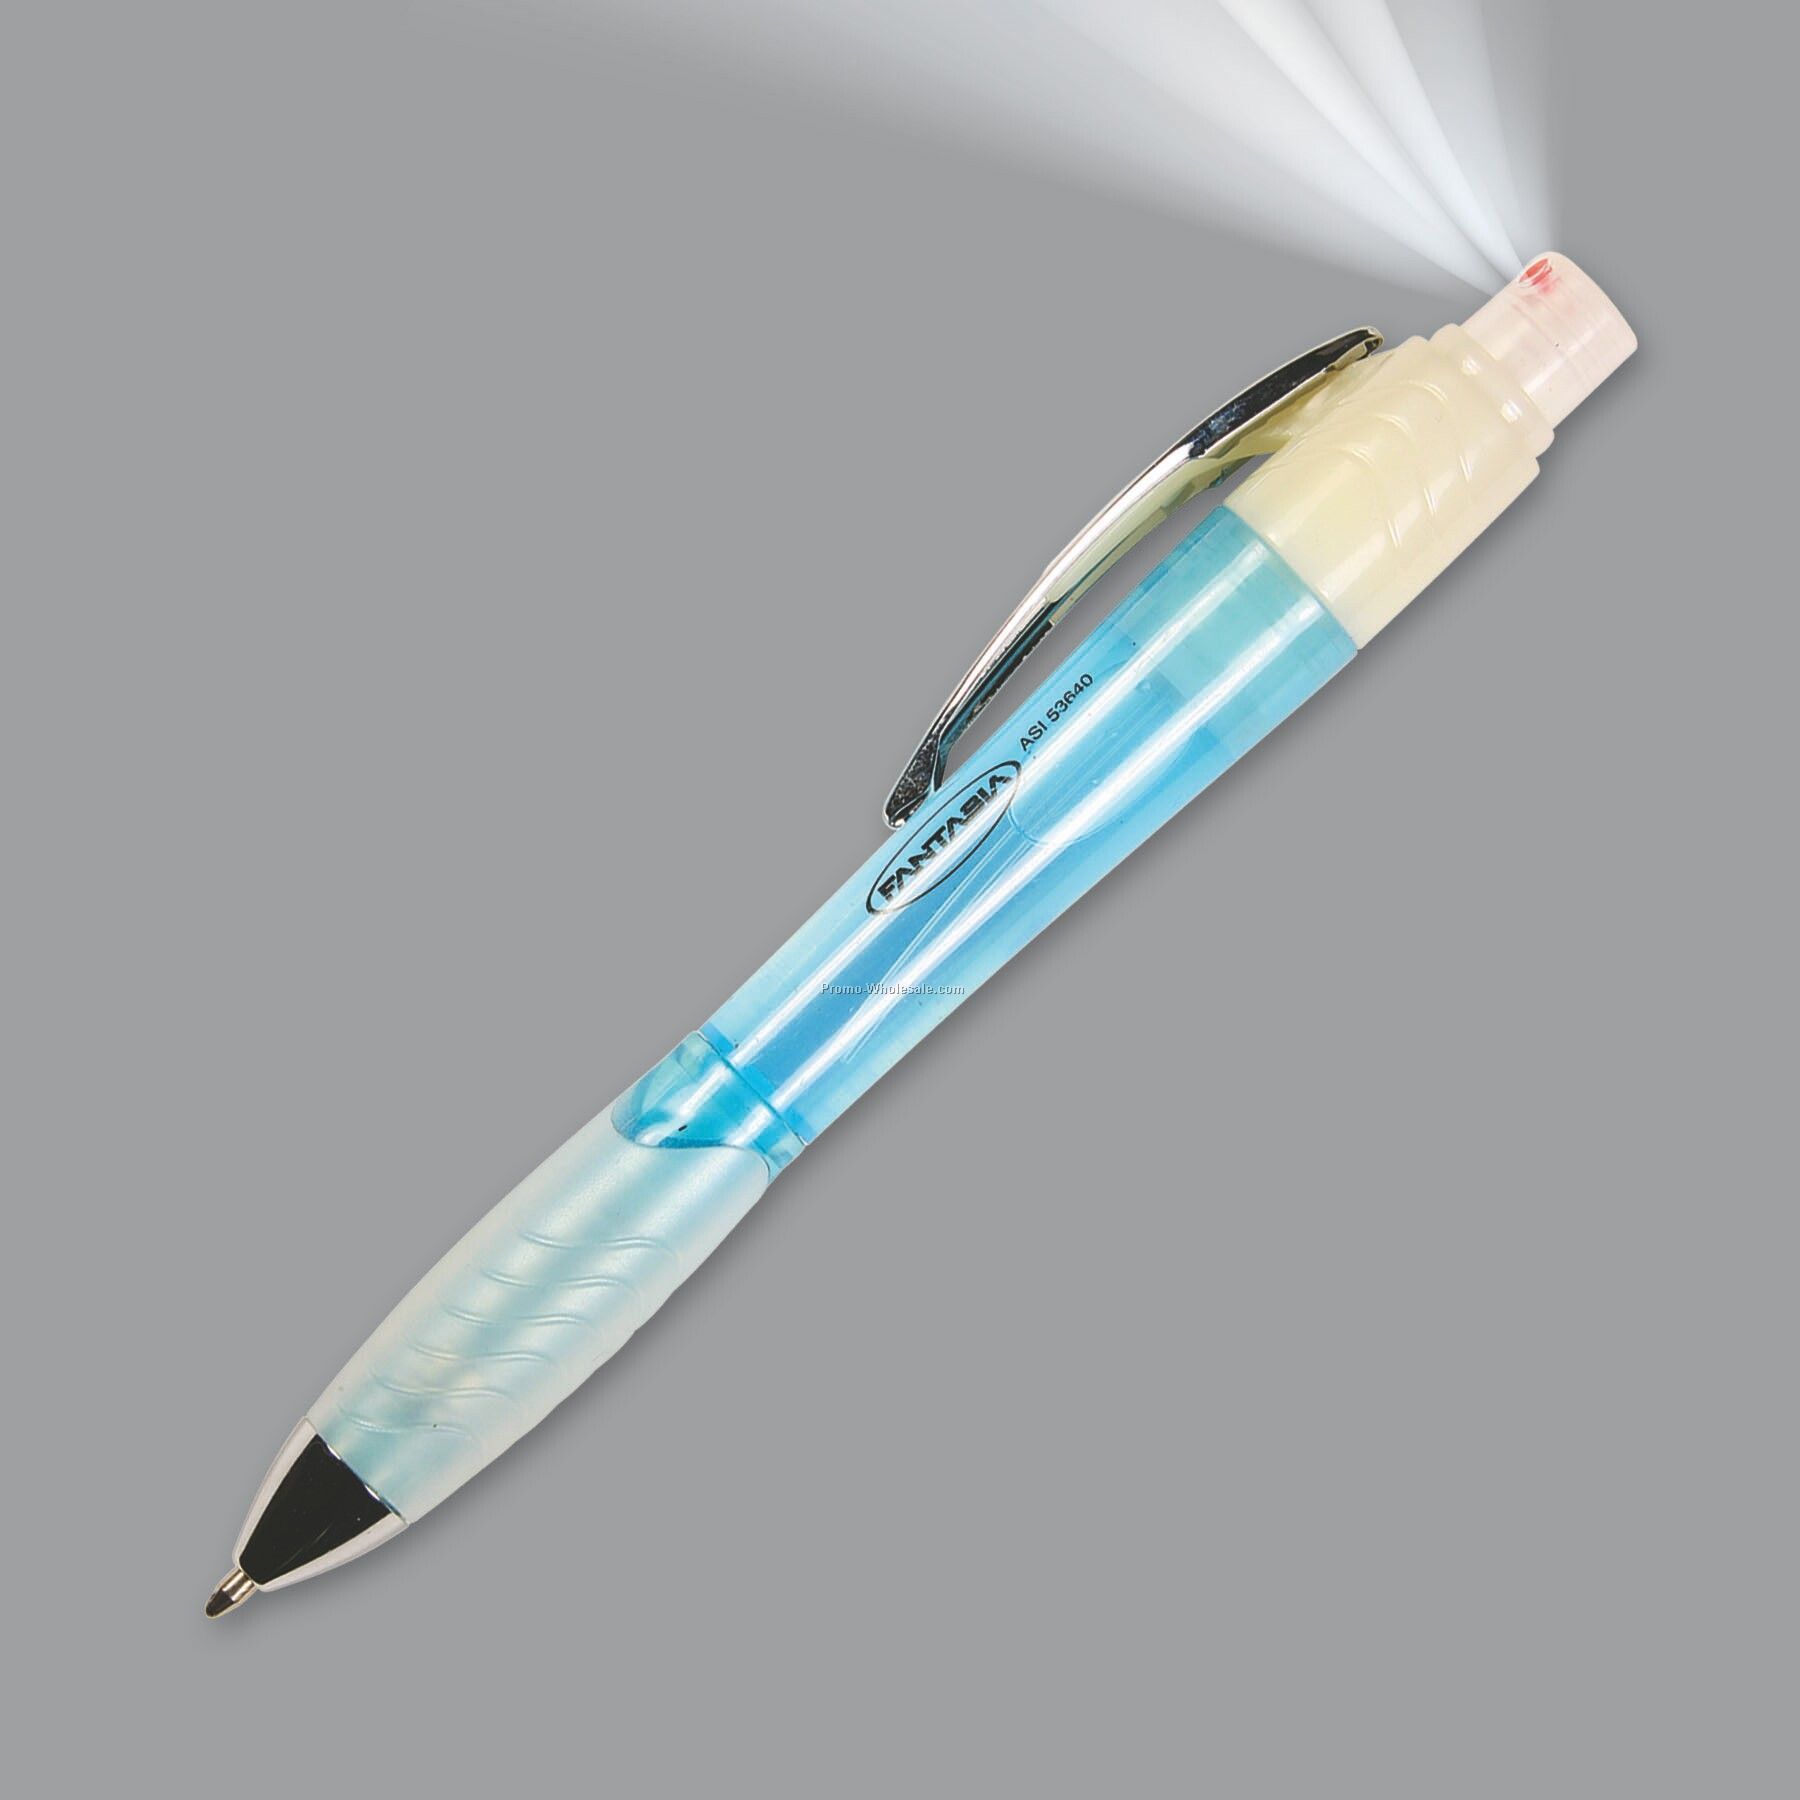 Fantasia 2-in-1 Hand Sanitizer Spray Pen